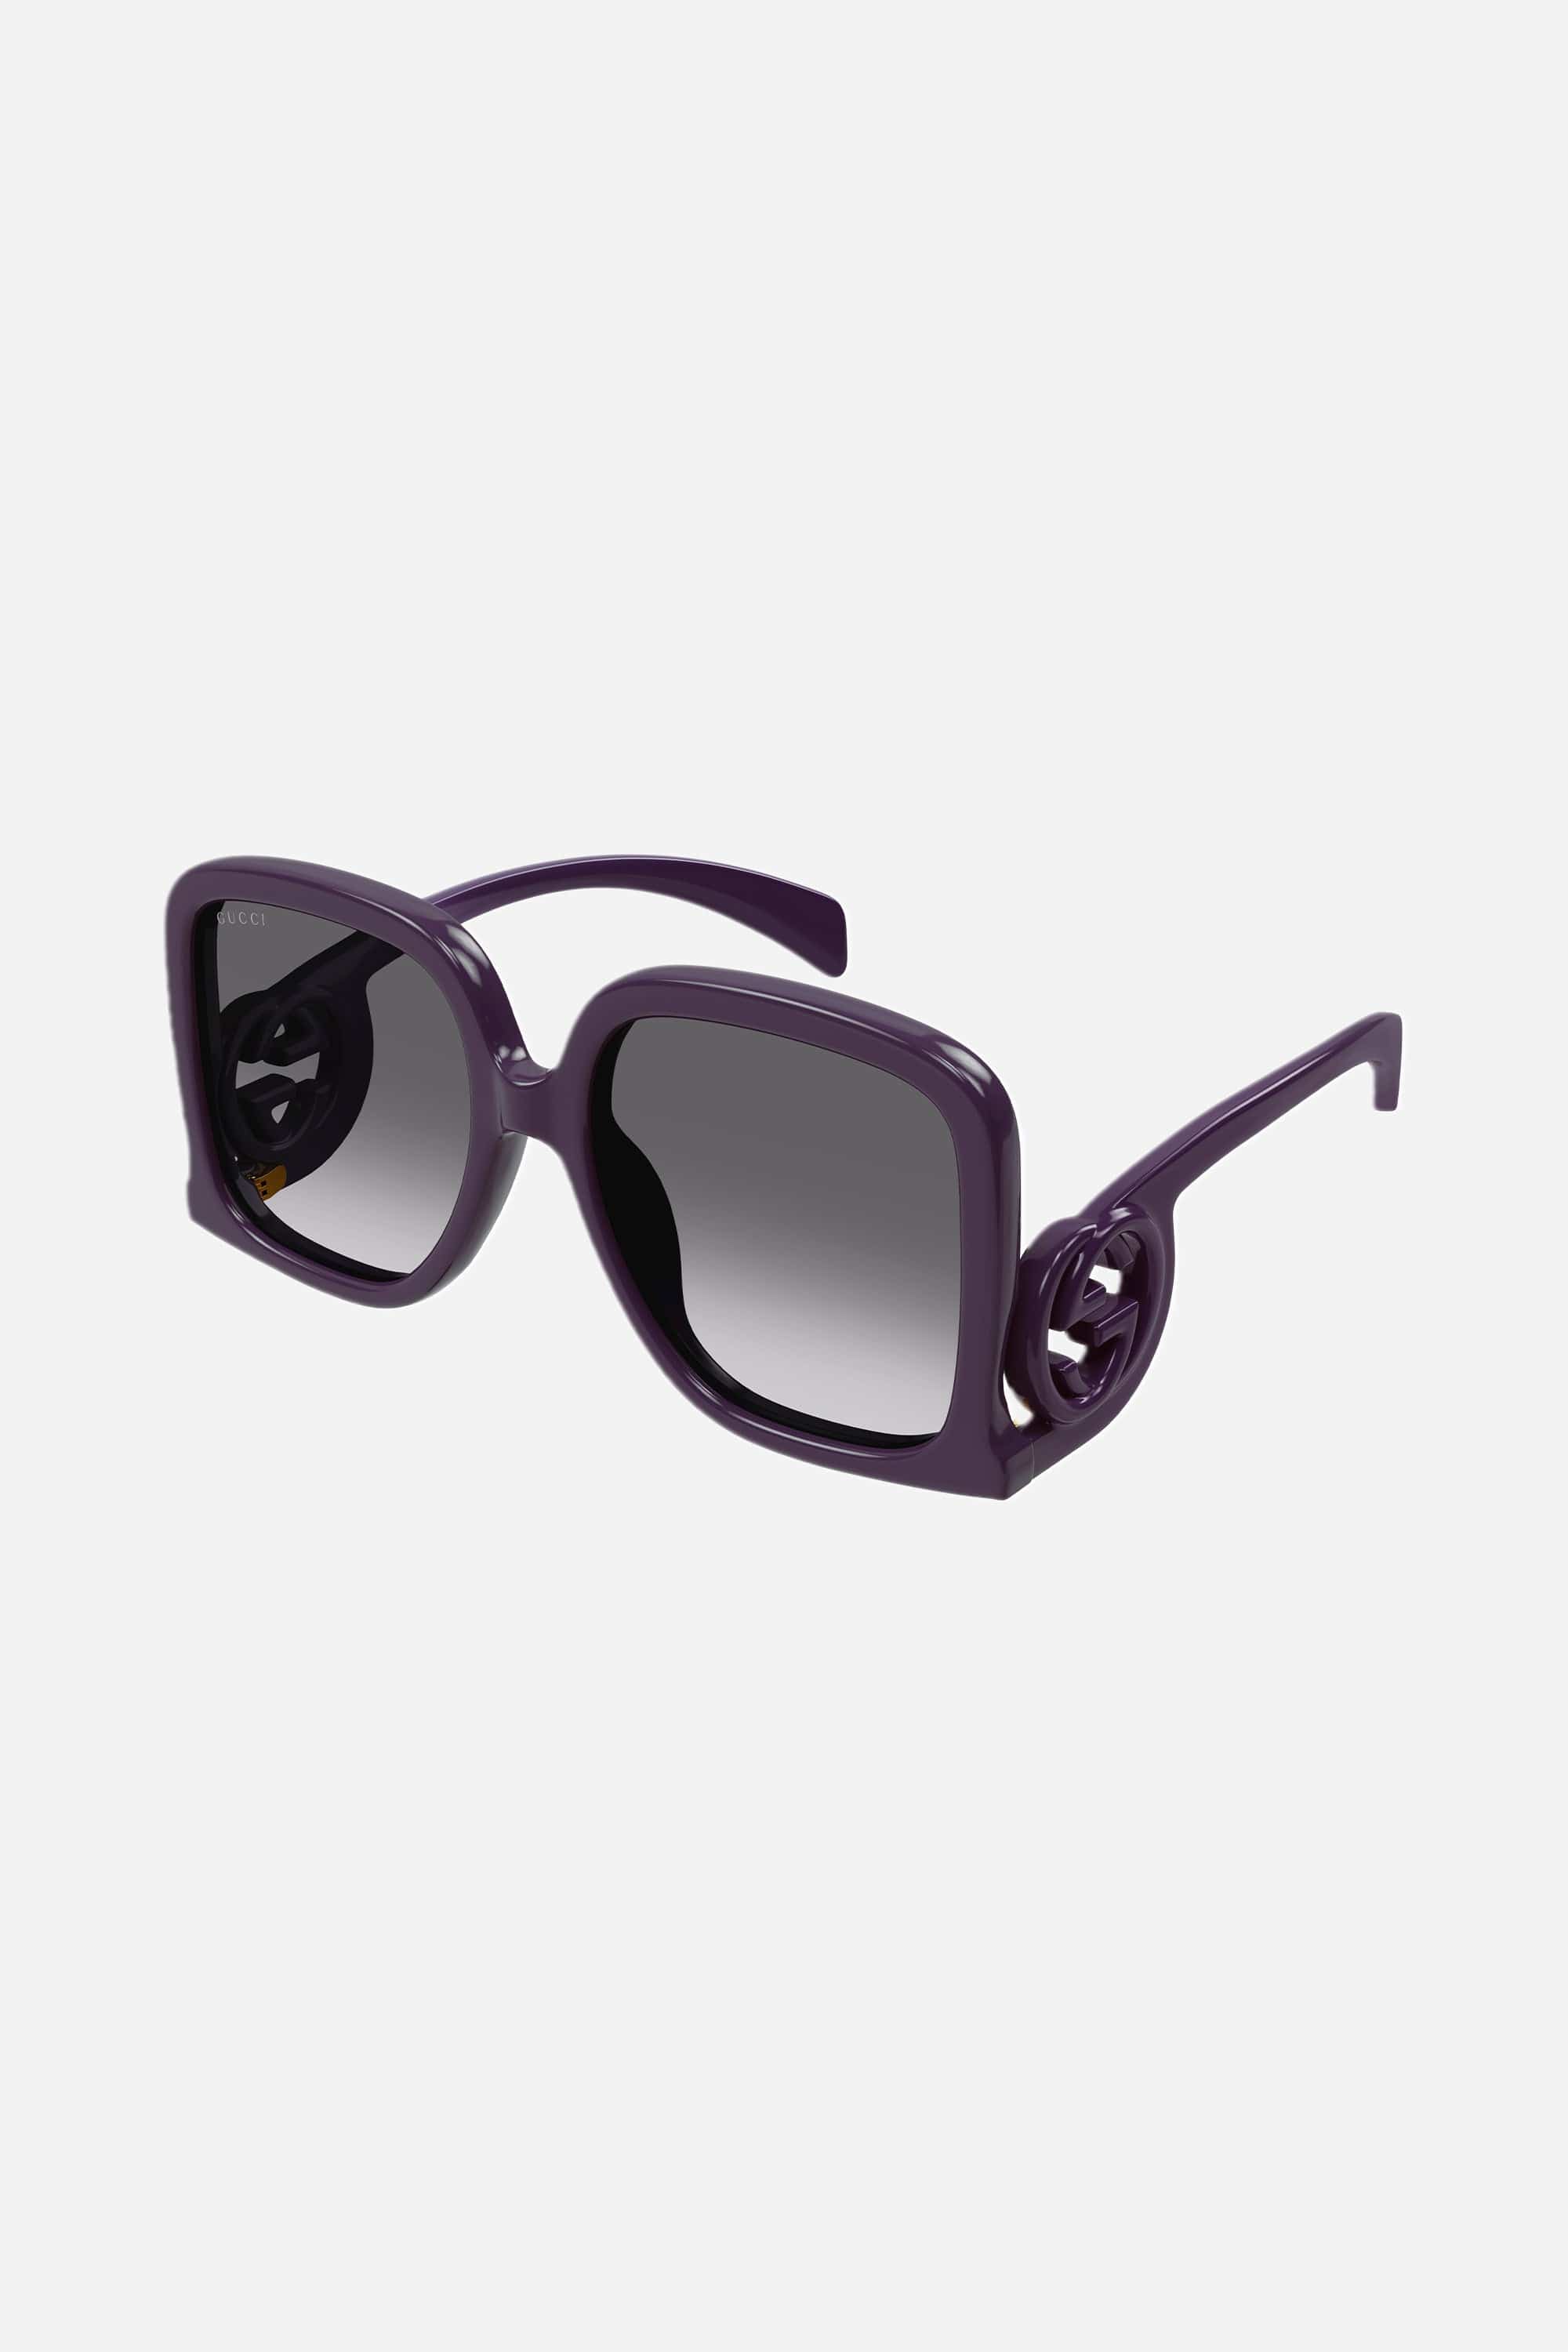 Gucci purple butterfly shape sunglasses - Eyewear Club